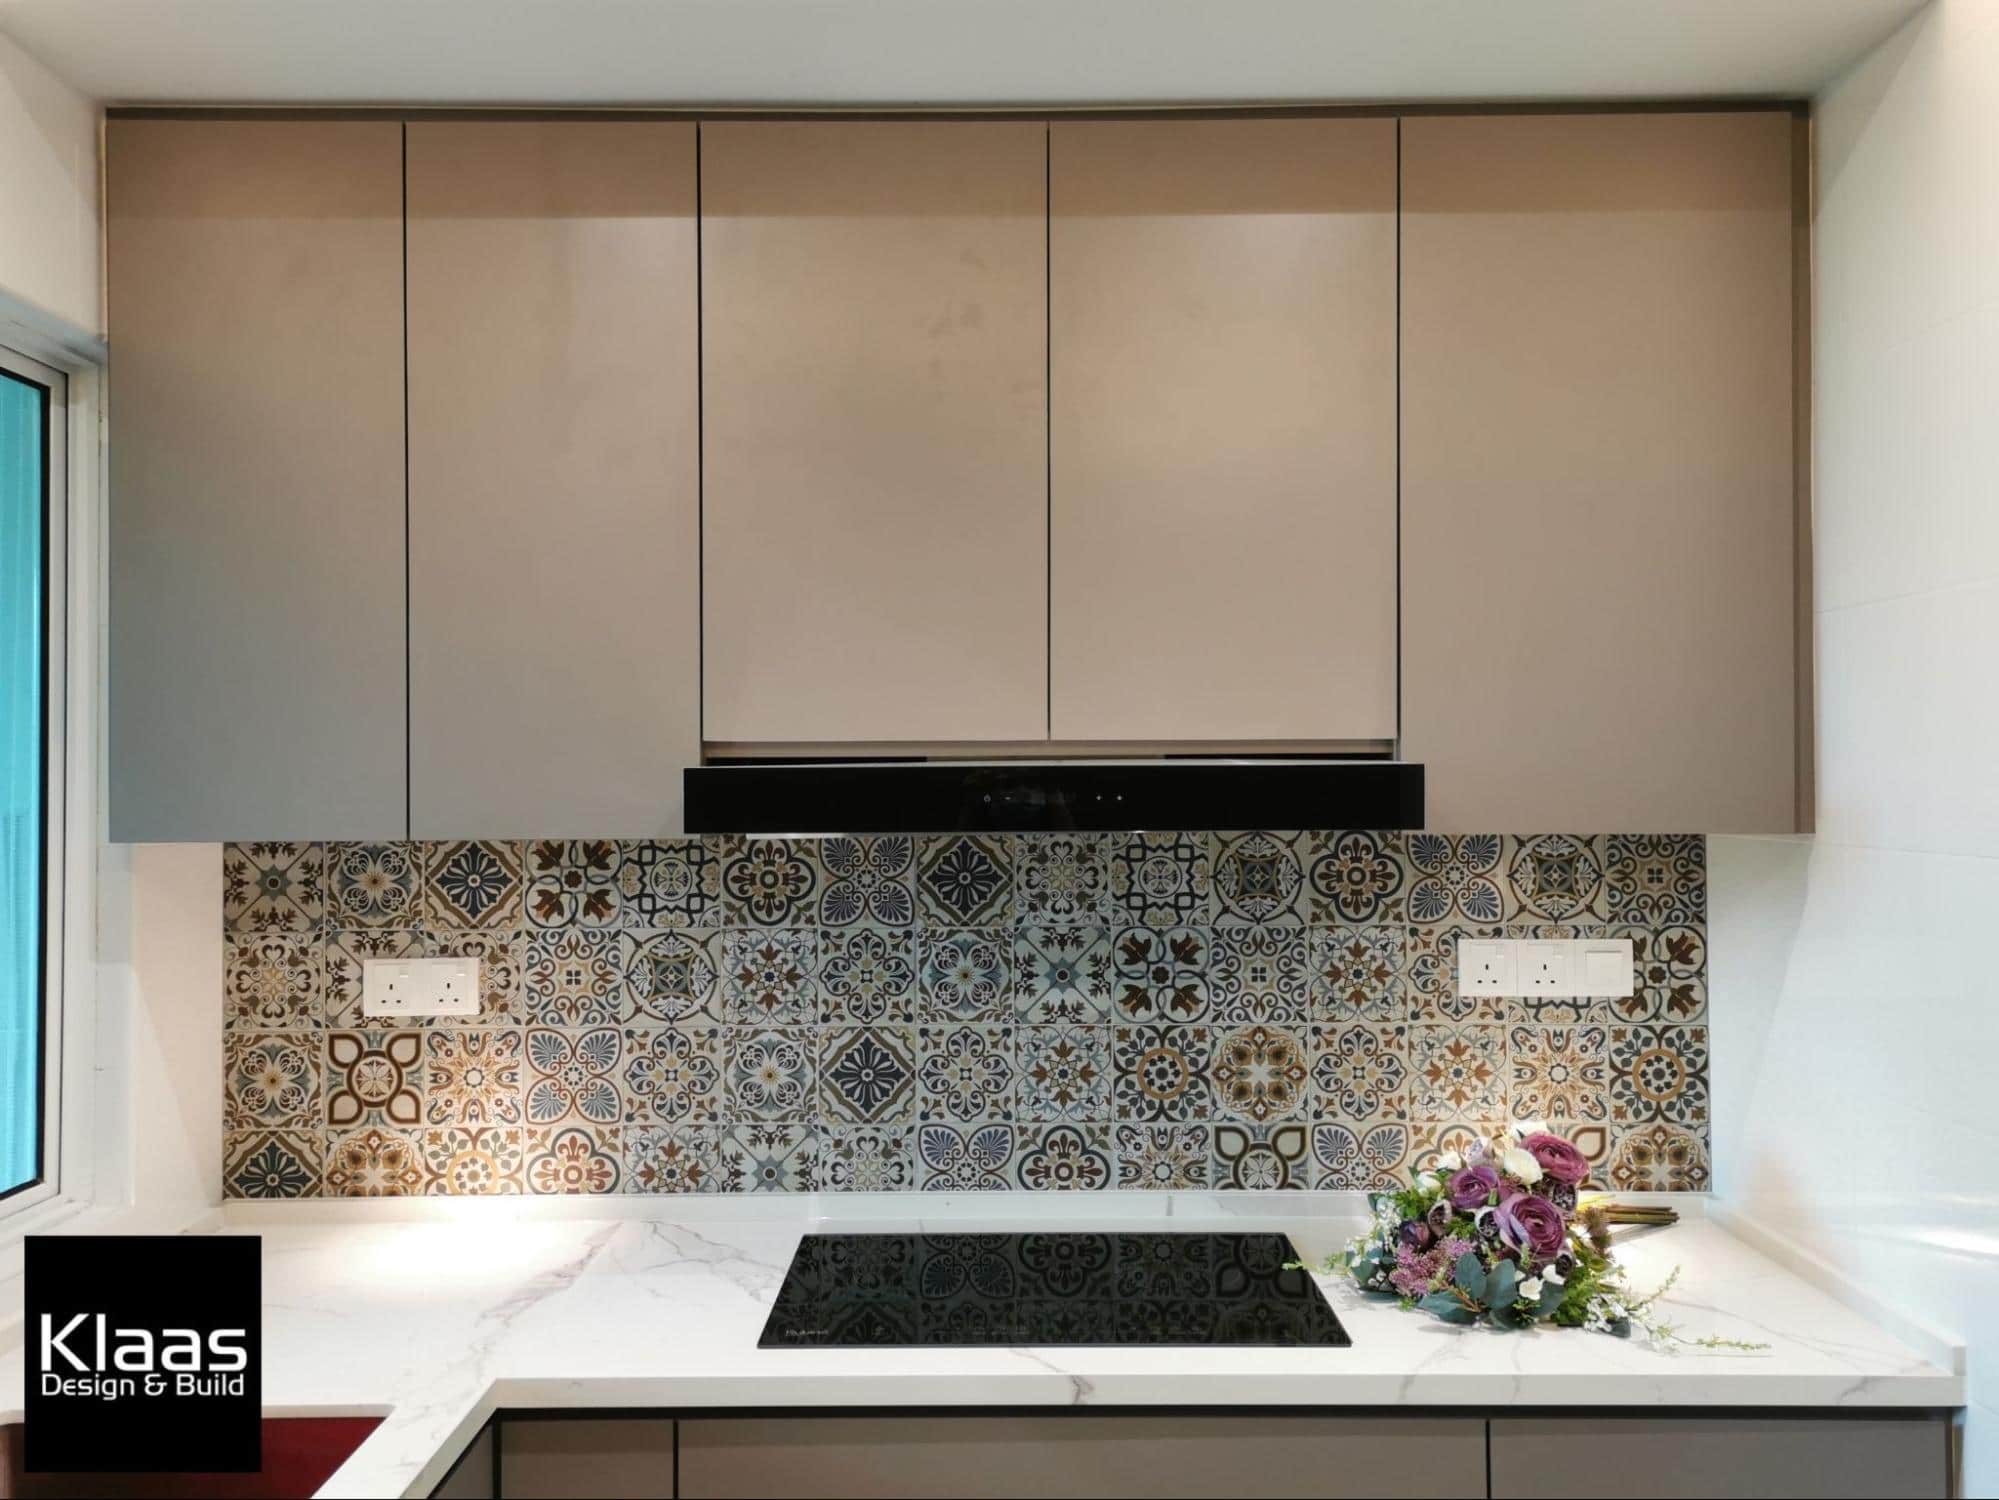 Kitchen backsplash made of abstract Talavera tiles